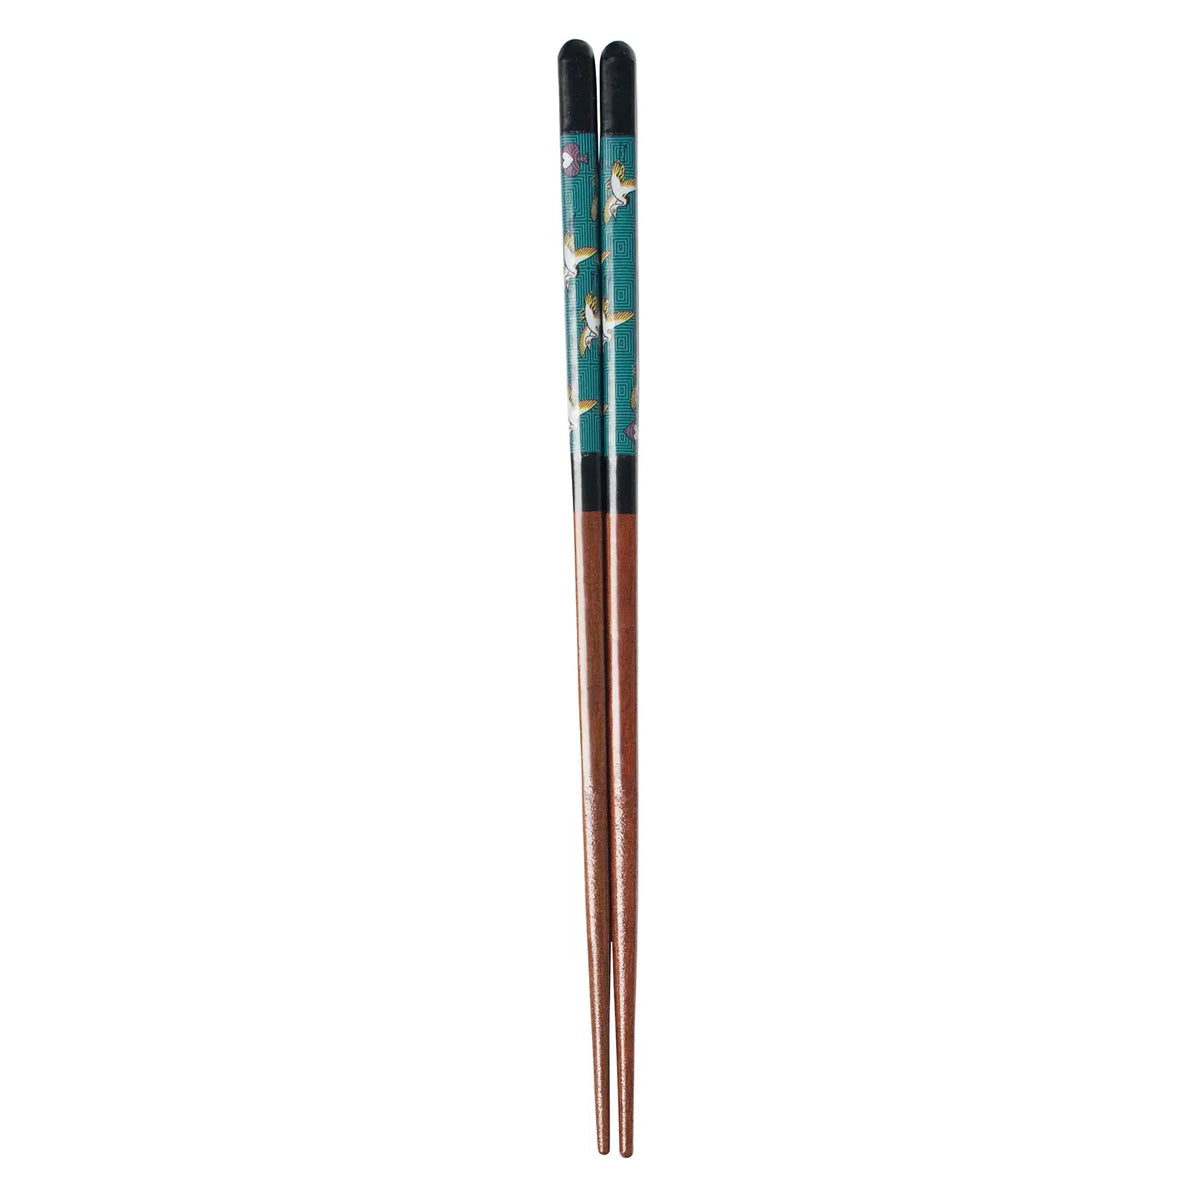 SEIKOU Wakasa Lacquered Natural Wood Chopsticks 23cm Black Crane